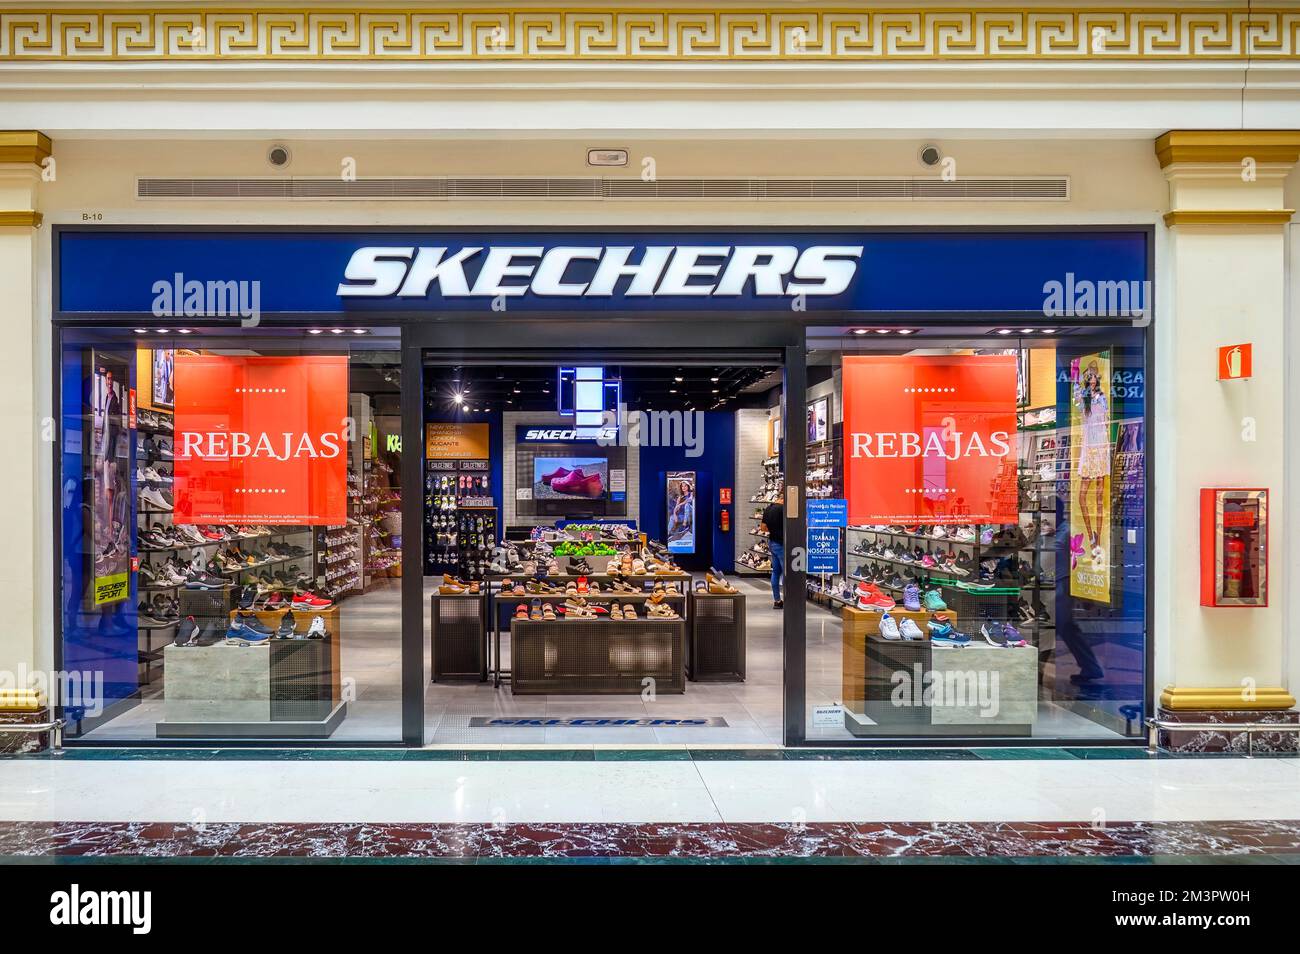 Skechers store shopping mall fotografías imágenes de alta - Alamy